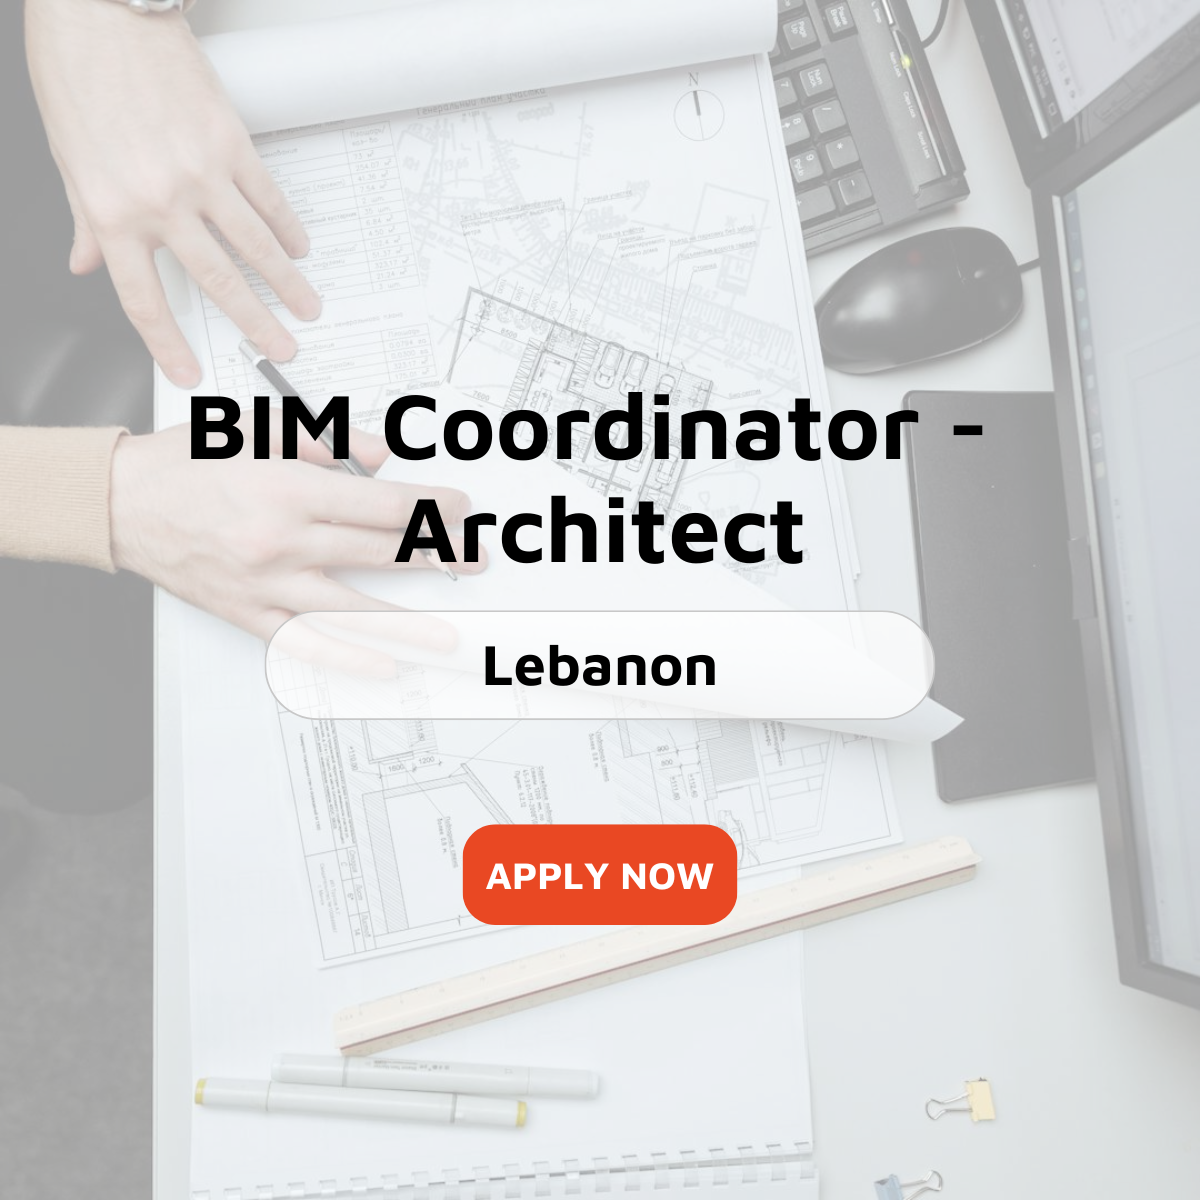 BIM Coordinator - Architect